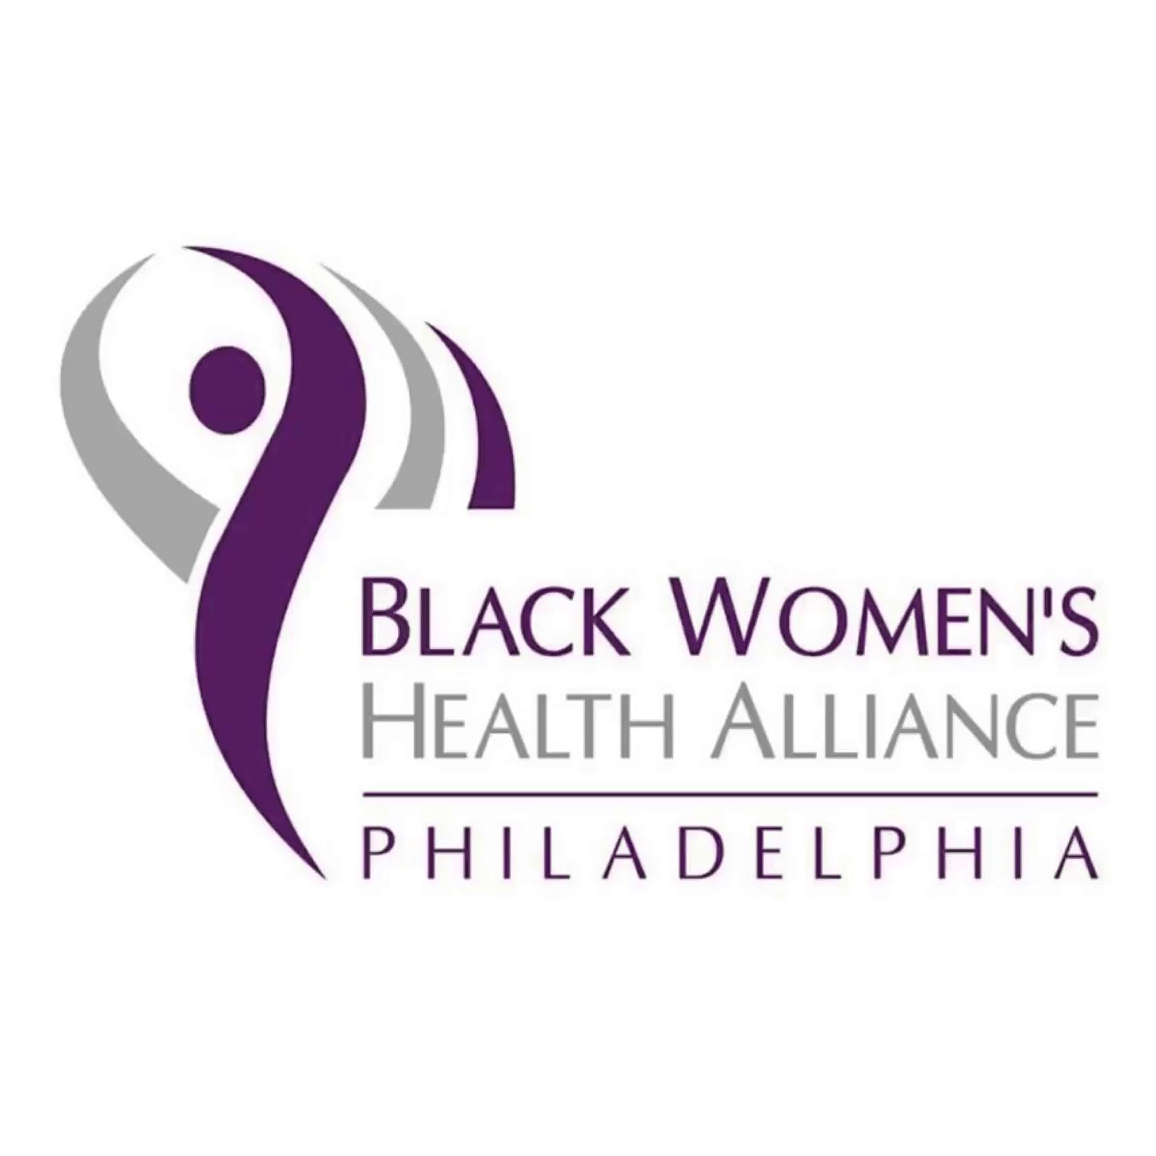 Female Organization in Pennsylvania - Philadelphia Black Women's Health Alliance